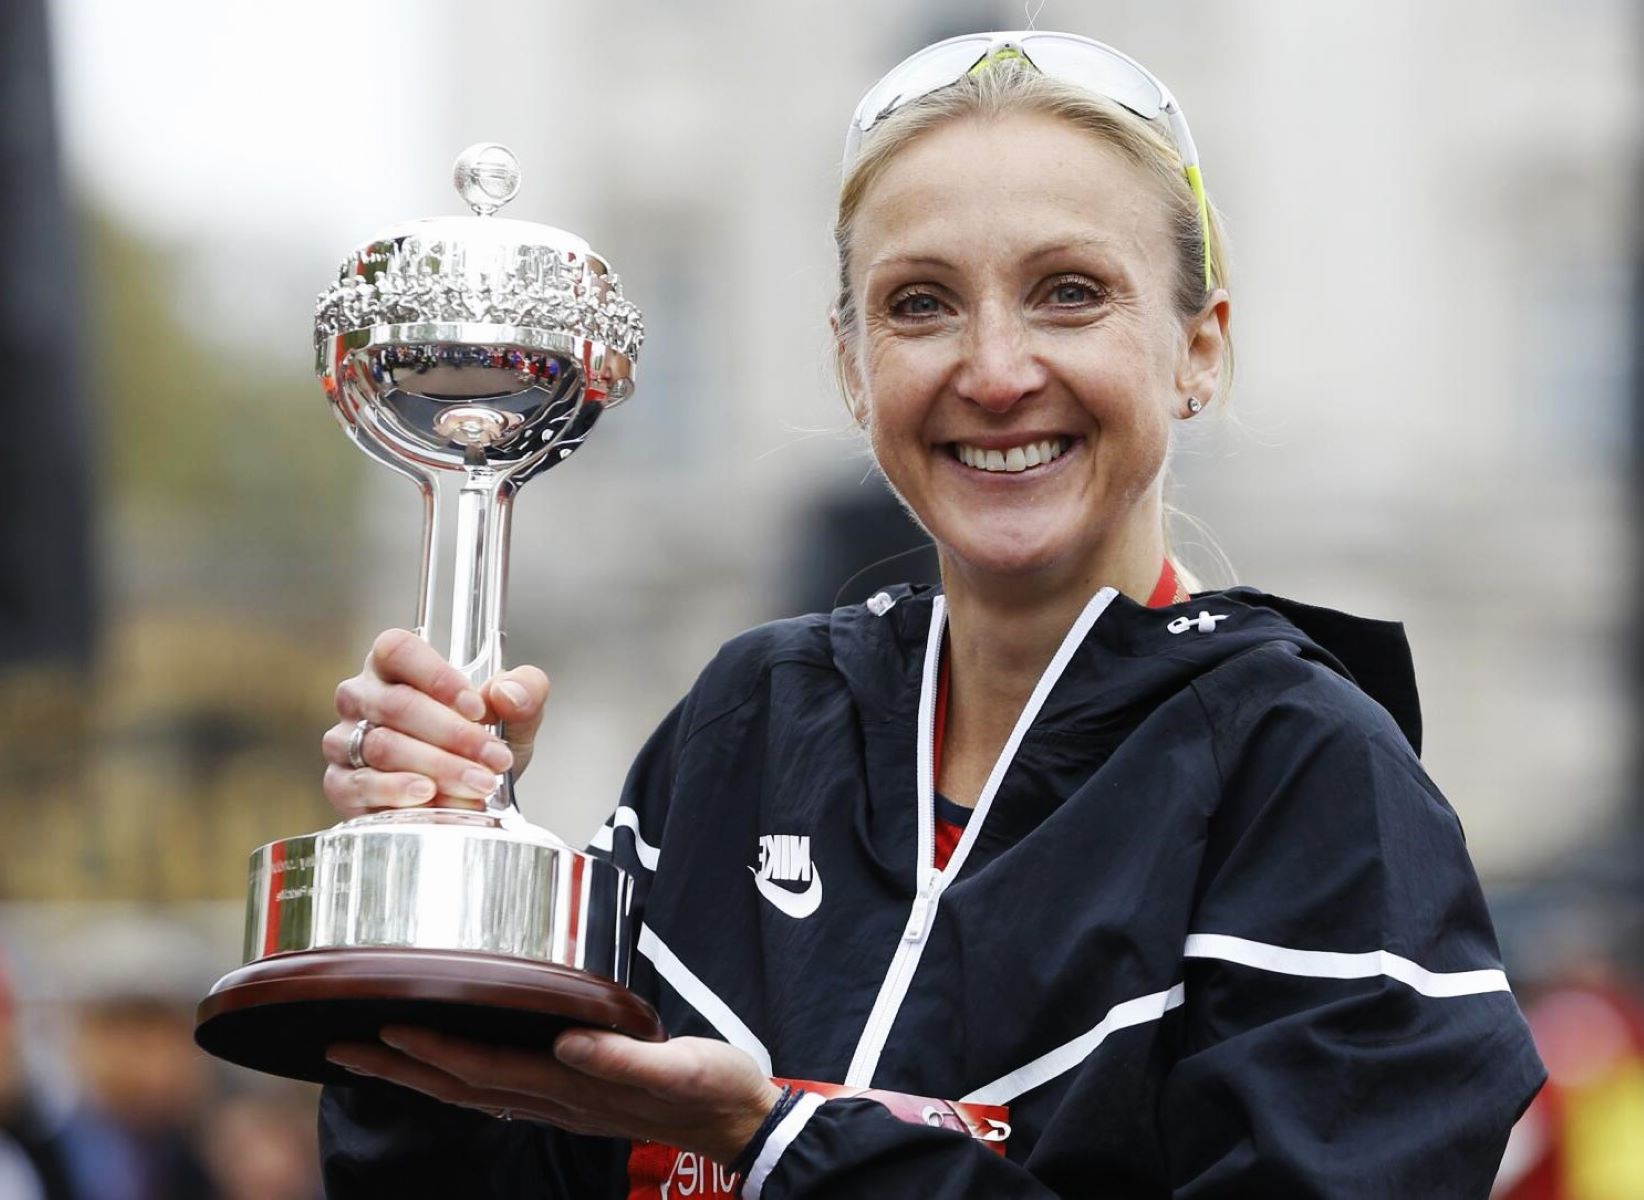 Paula Radcliffe’s Expert Advice For Marathon Training